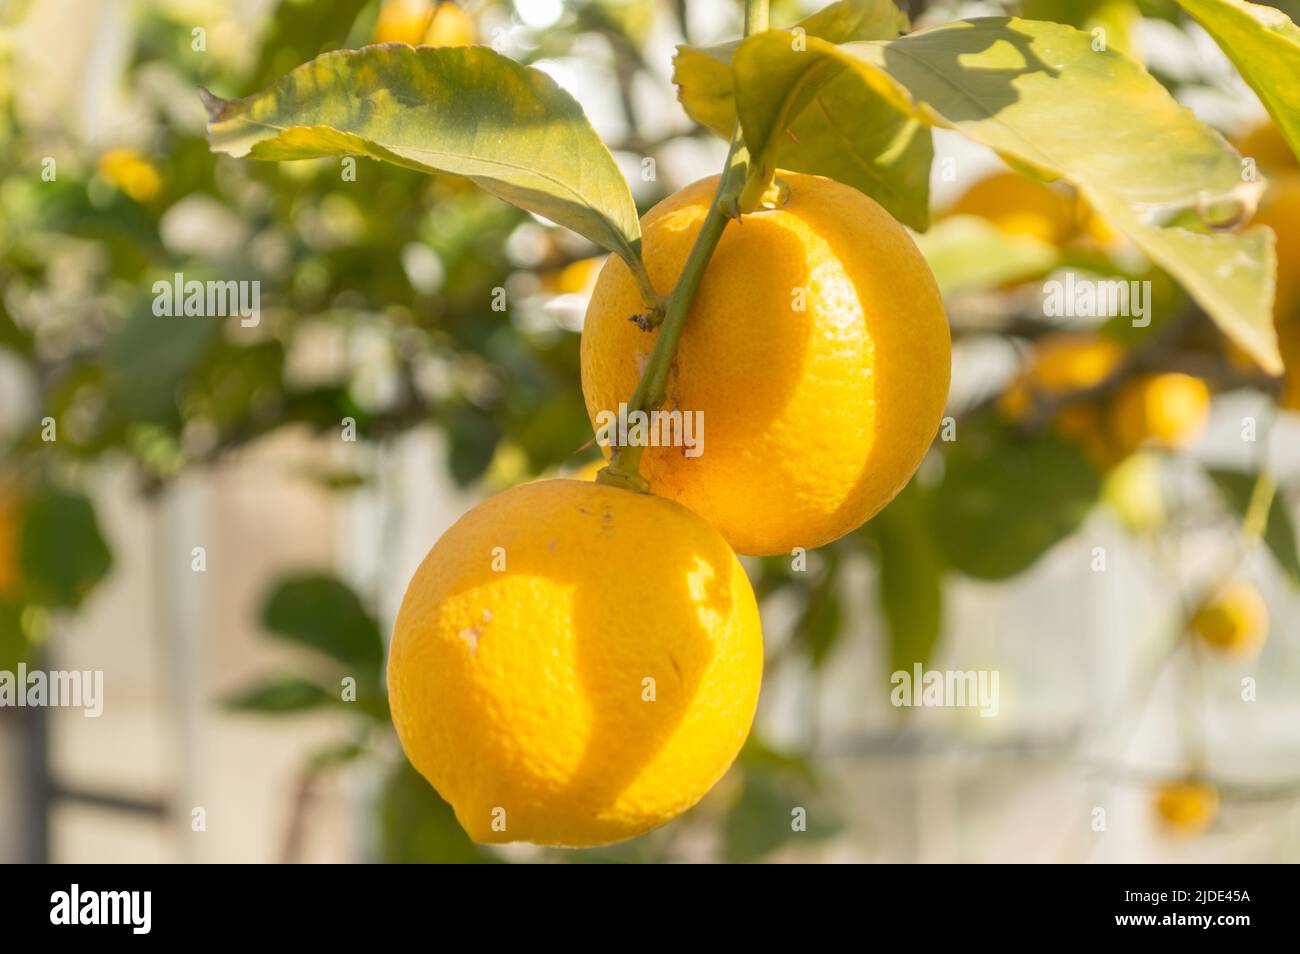 lemons on the tree Stock Photo